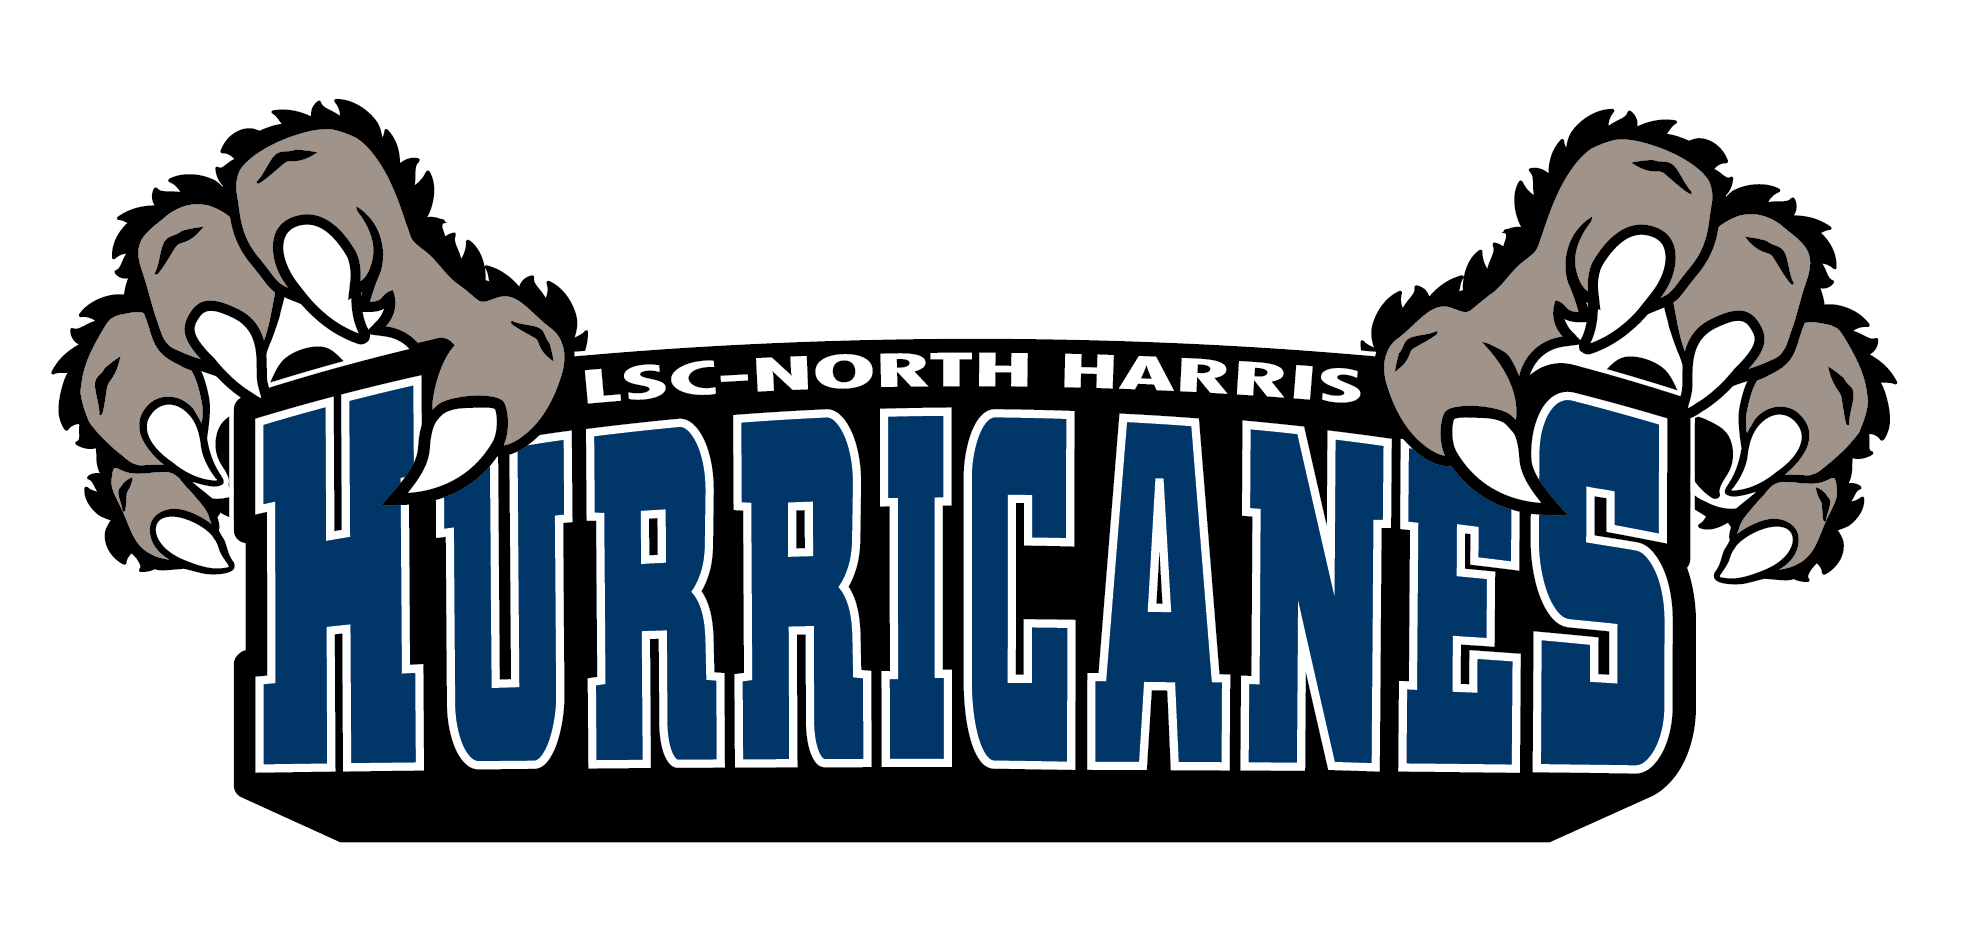 LSC-North Harris Hurricanes logo